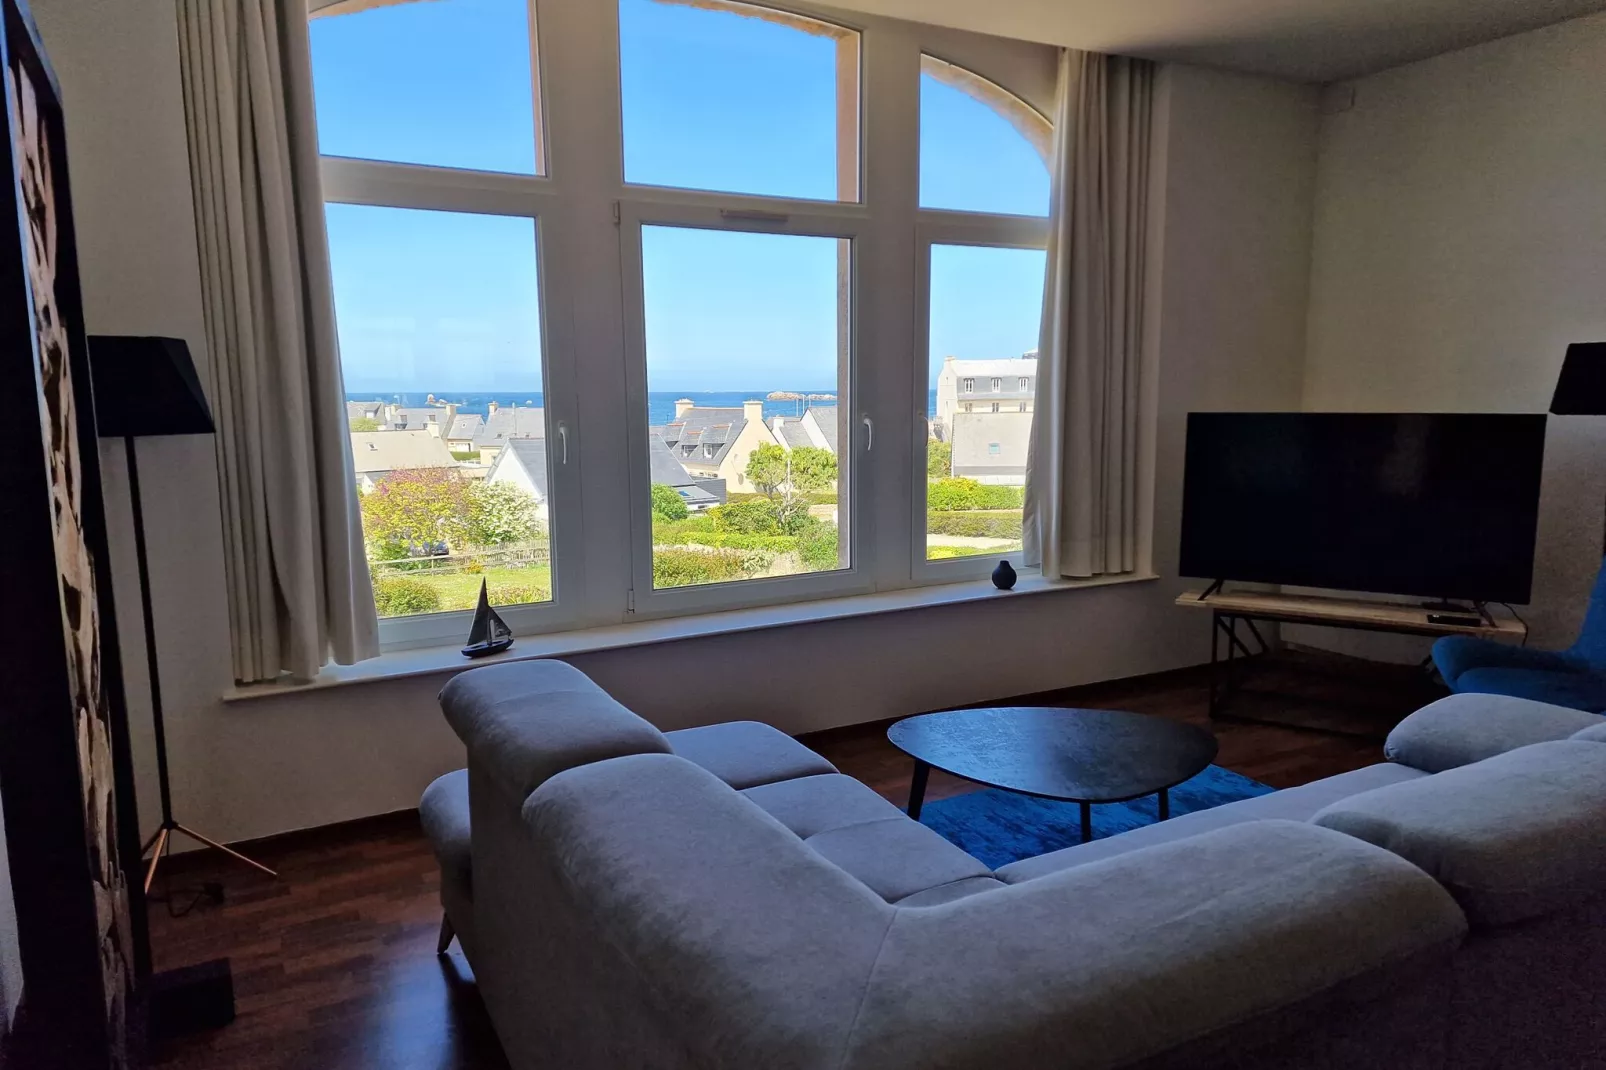 Pretty apartment with sea view in Primel